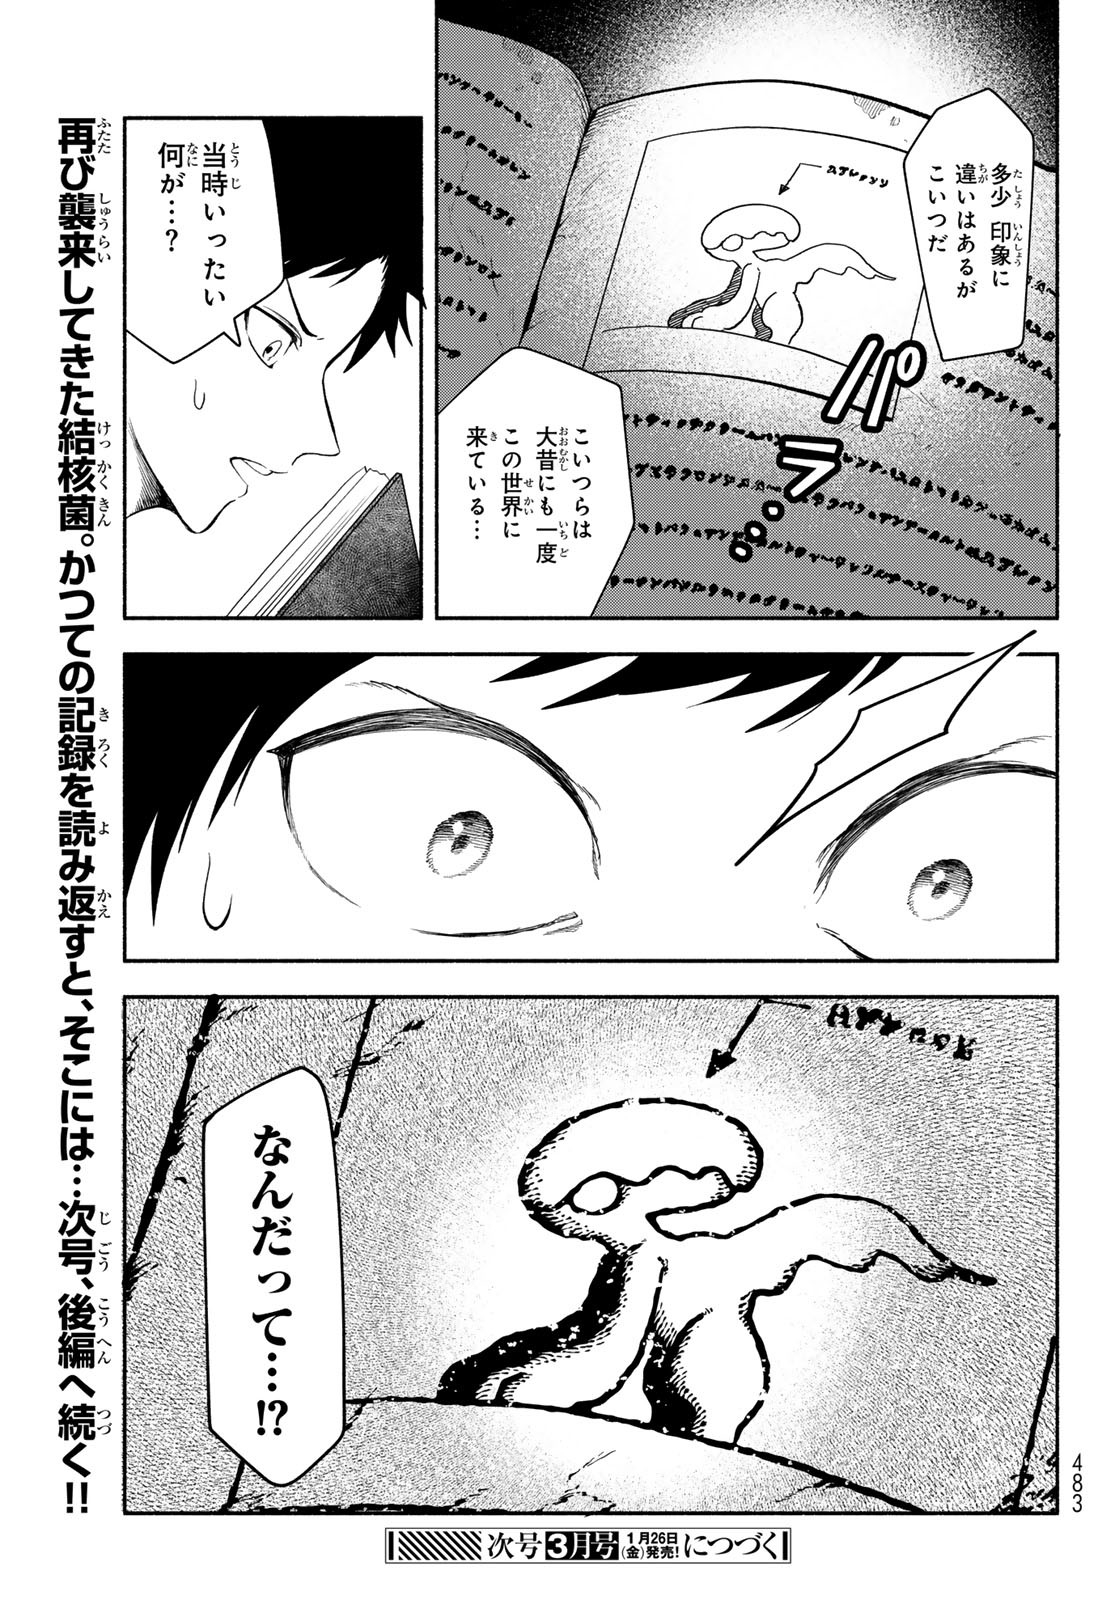 Hataraku Saibou Okusuri - Chapter 7.1 - Page 29